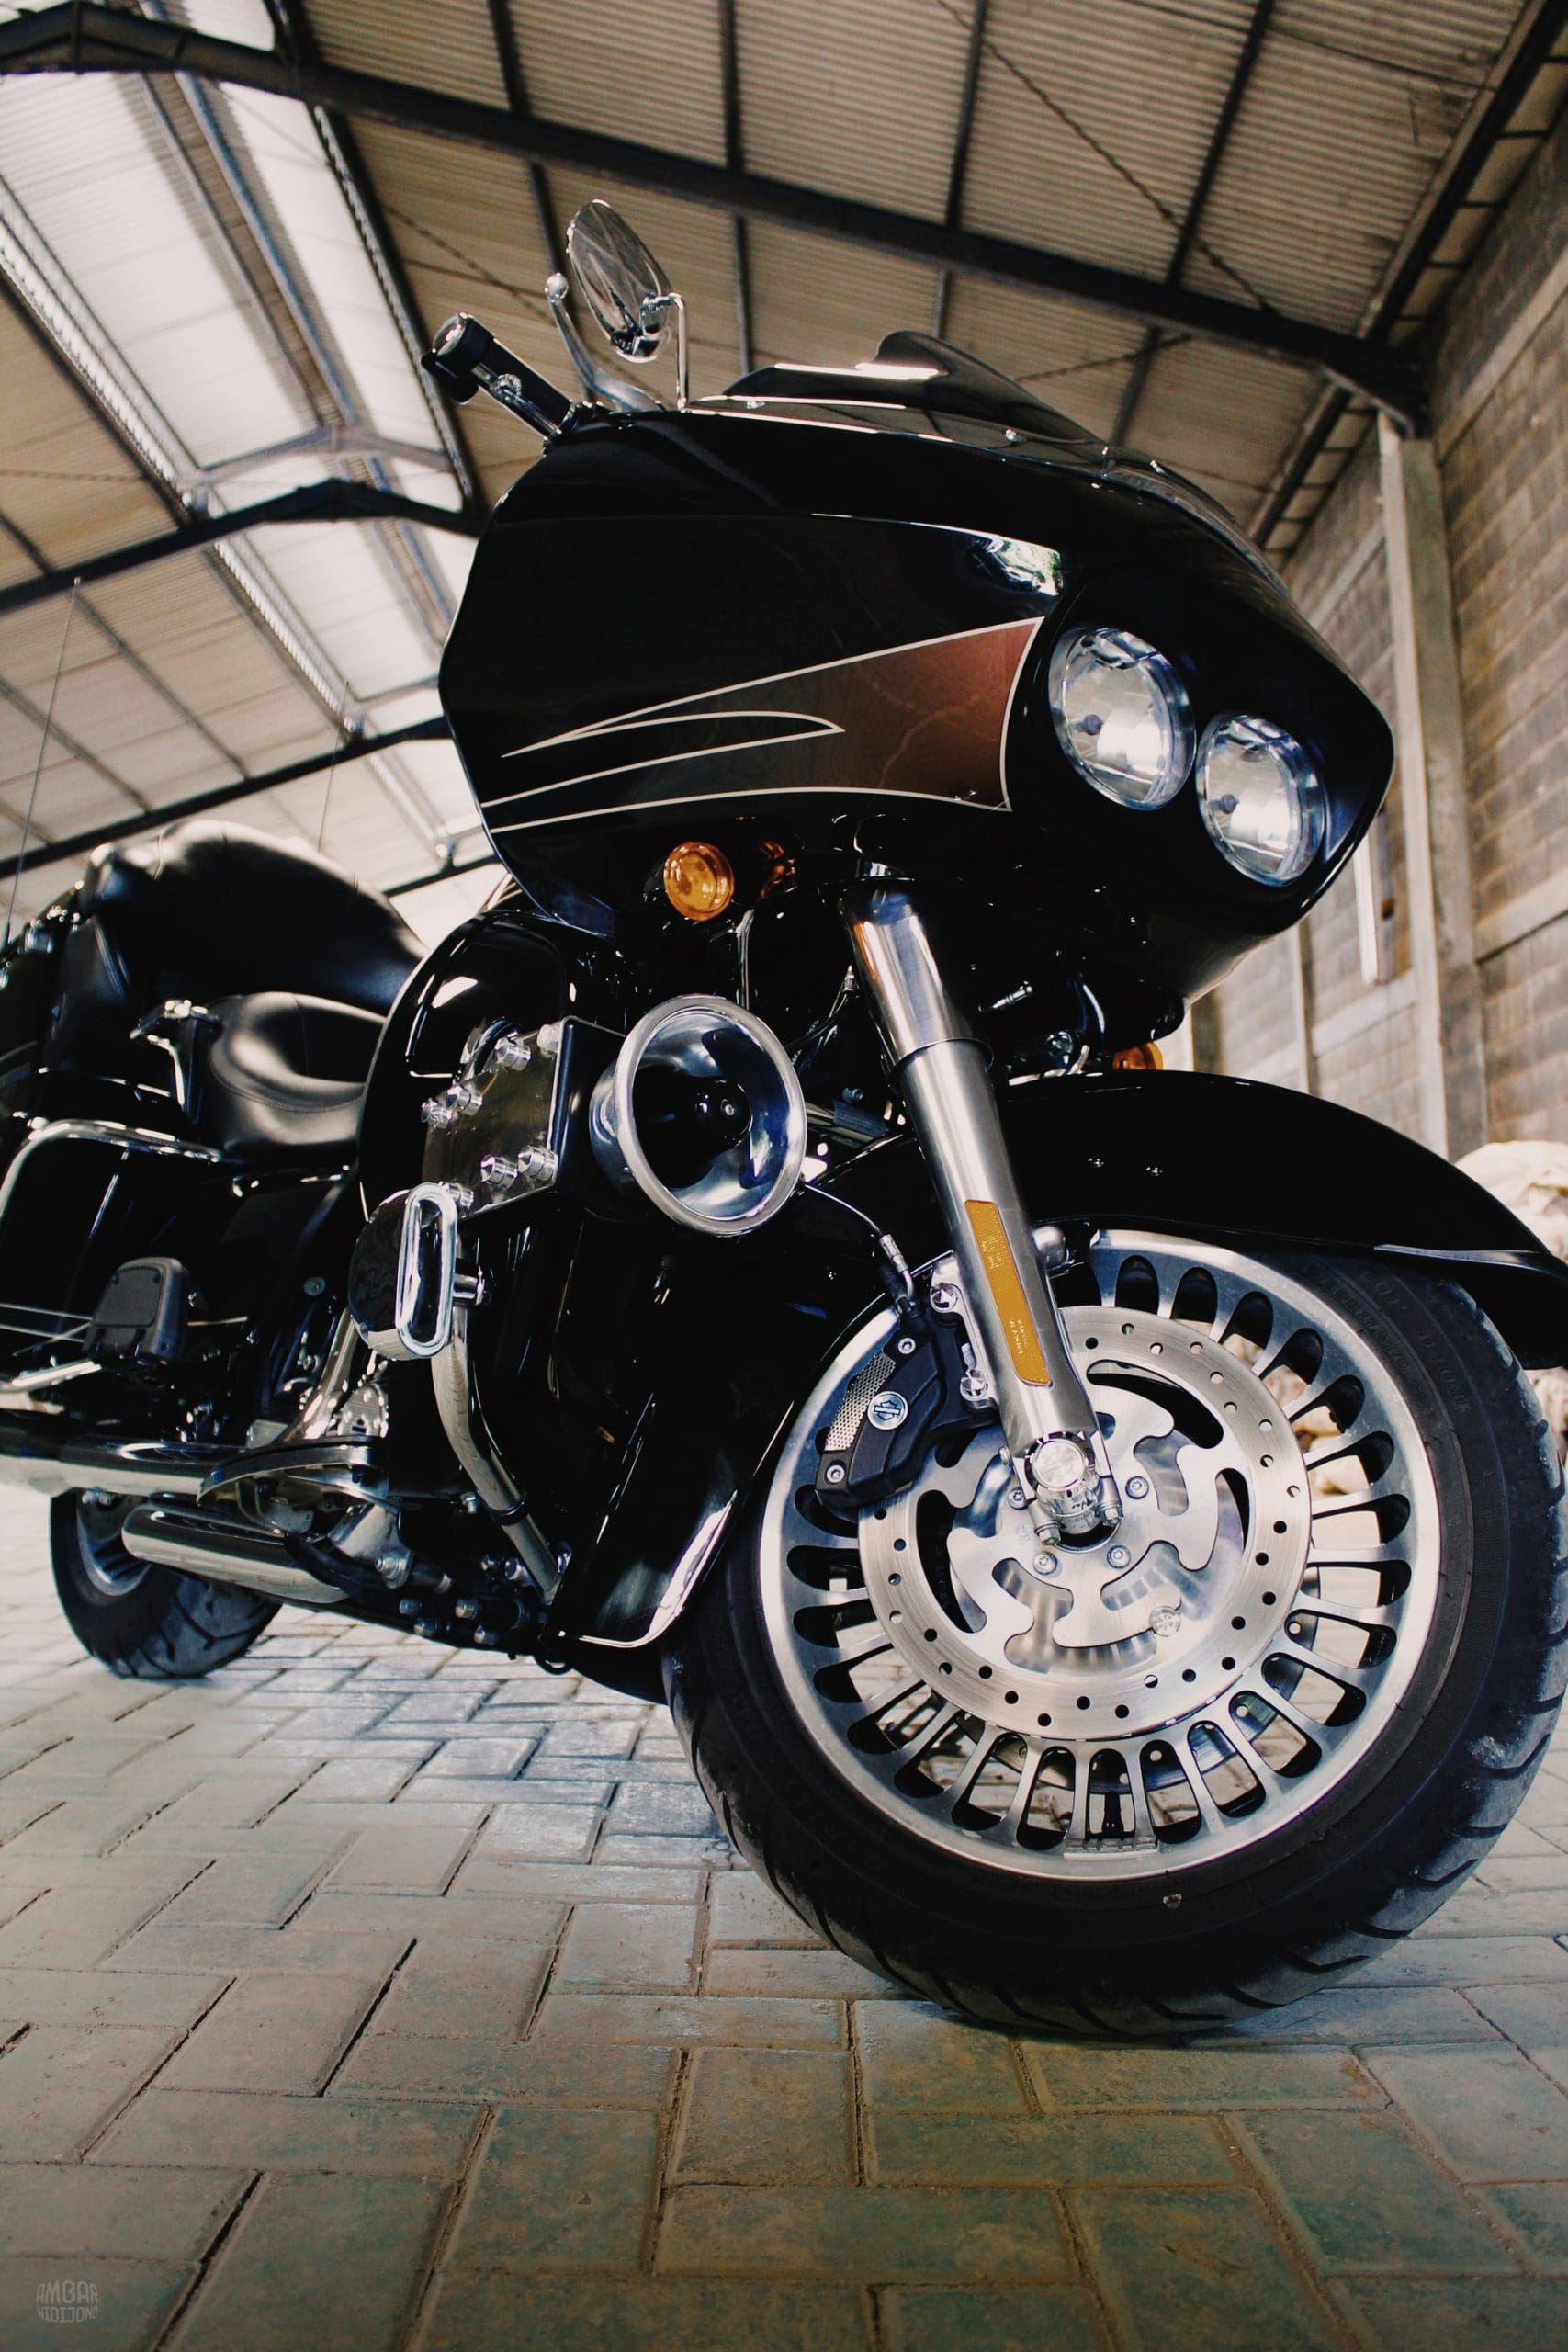 Harley Davidson Iphone Wallpaper Online GET 53 OFF islandcrematoriumie